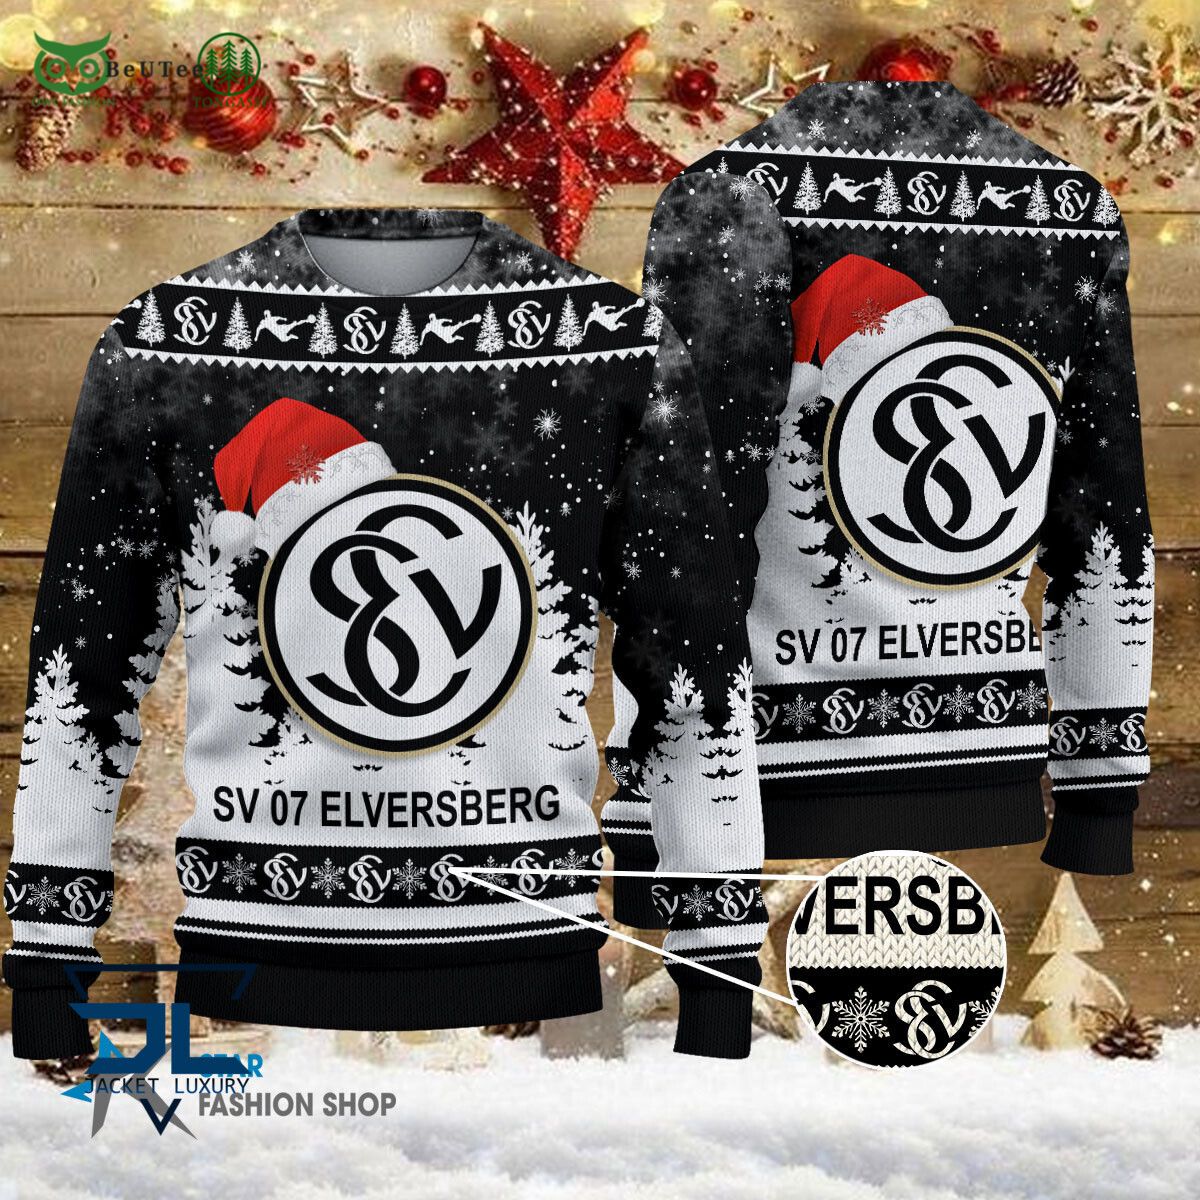 sv 07 elversberg bundesliga champions ugly sweater 1 mNZQi